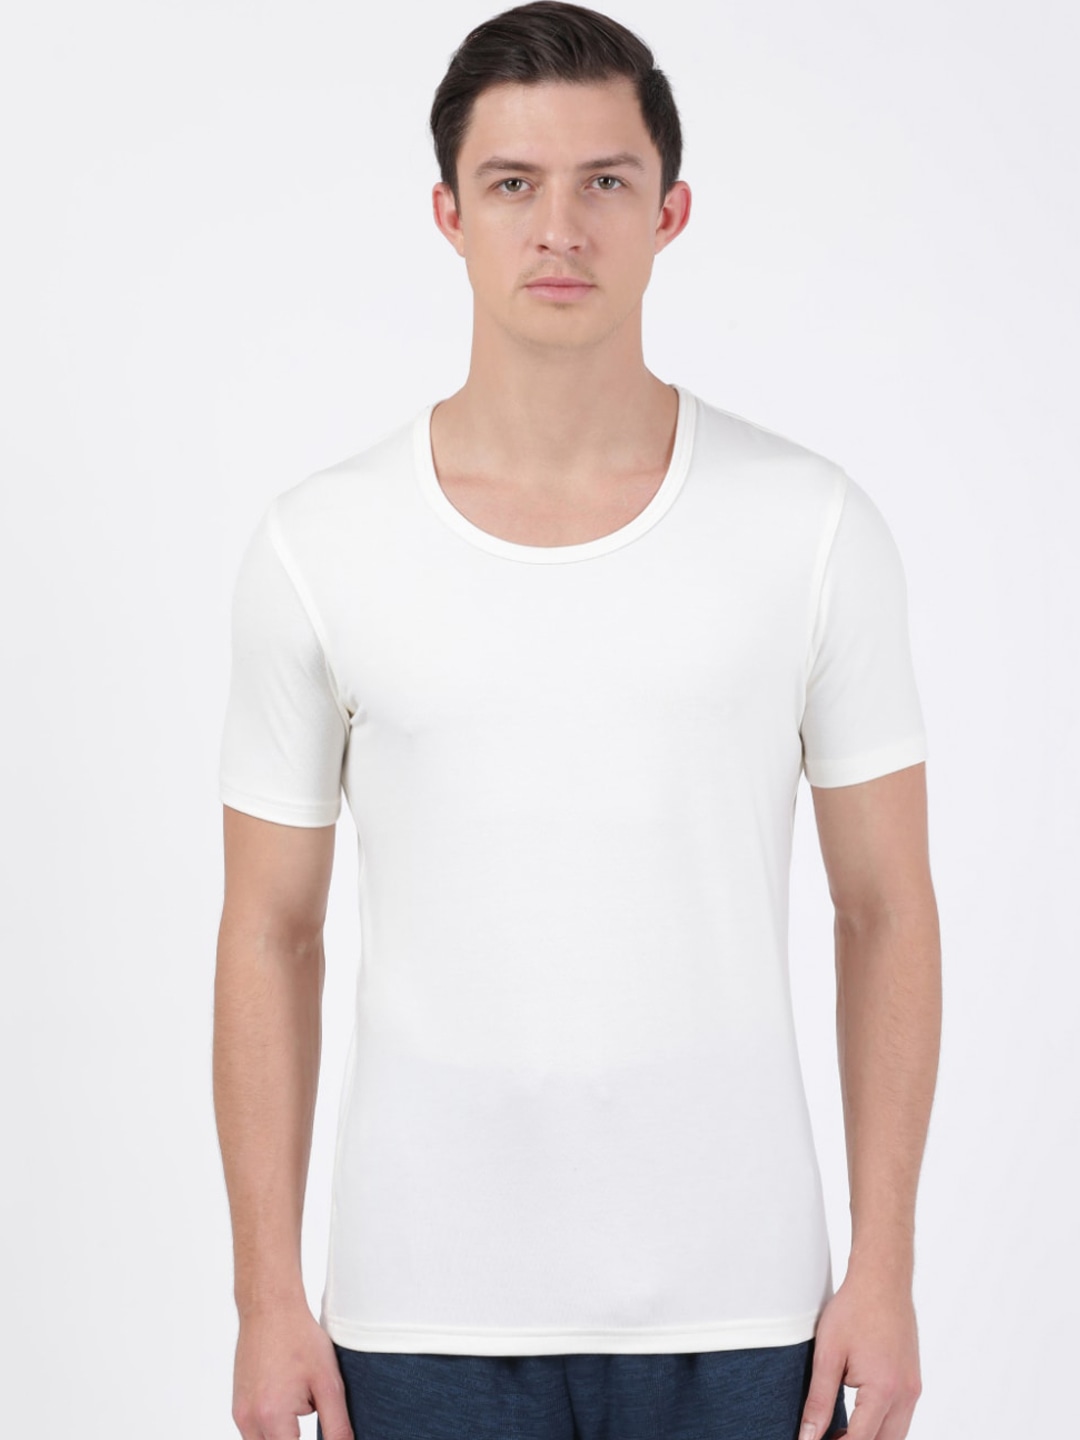 Clothing Innerwear Vests | Jockey Men White Solid Innerwear Vests - FF54685